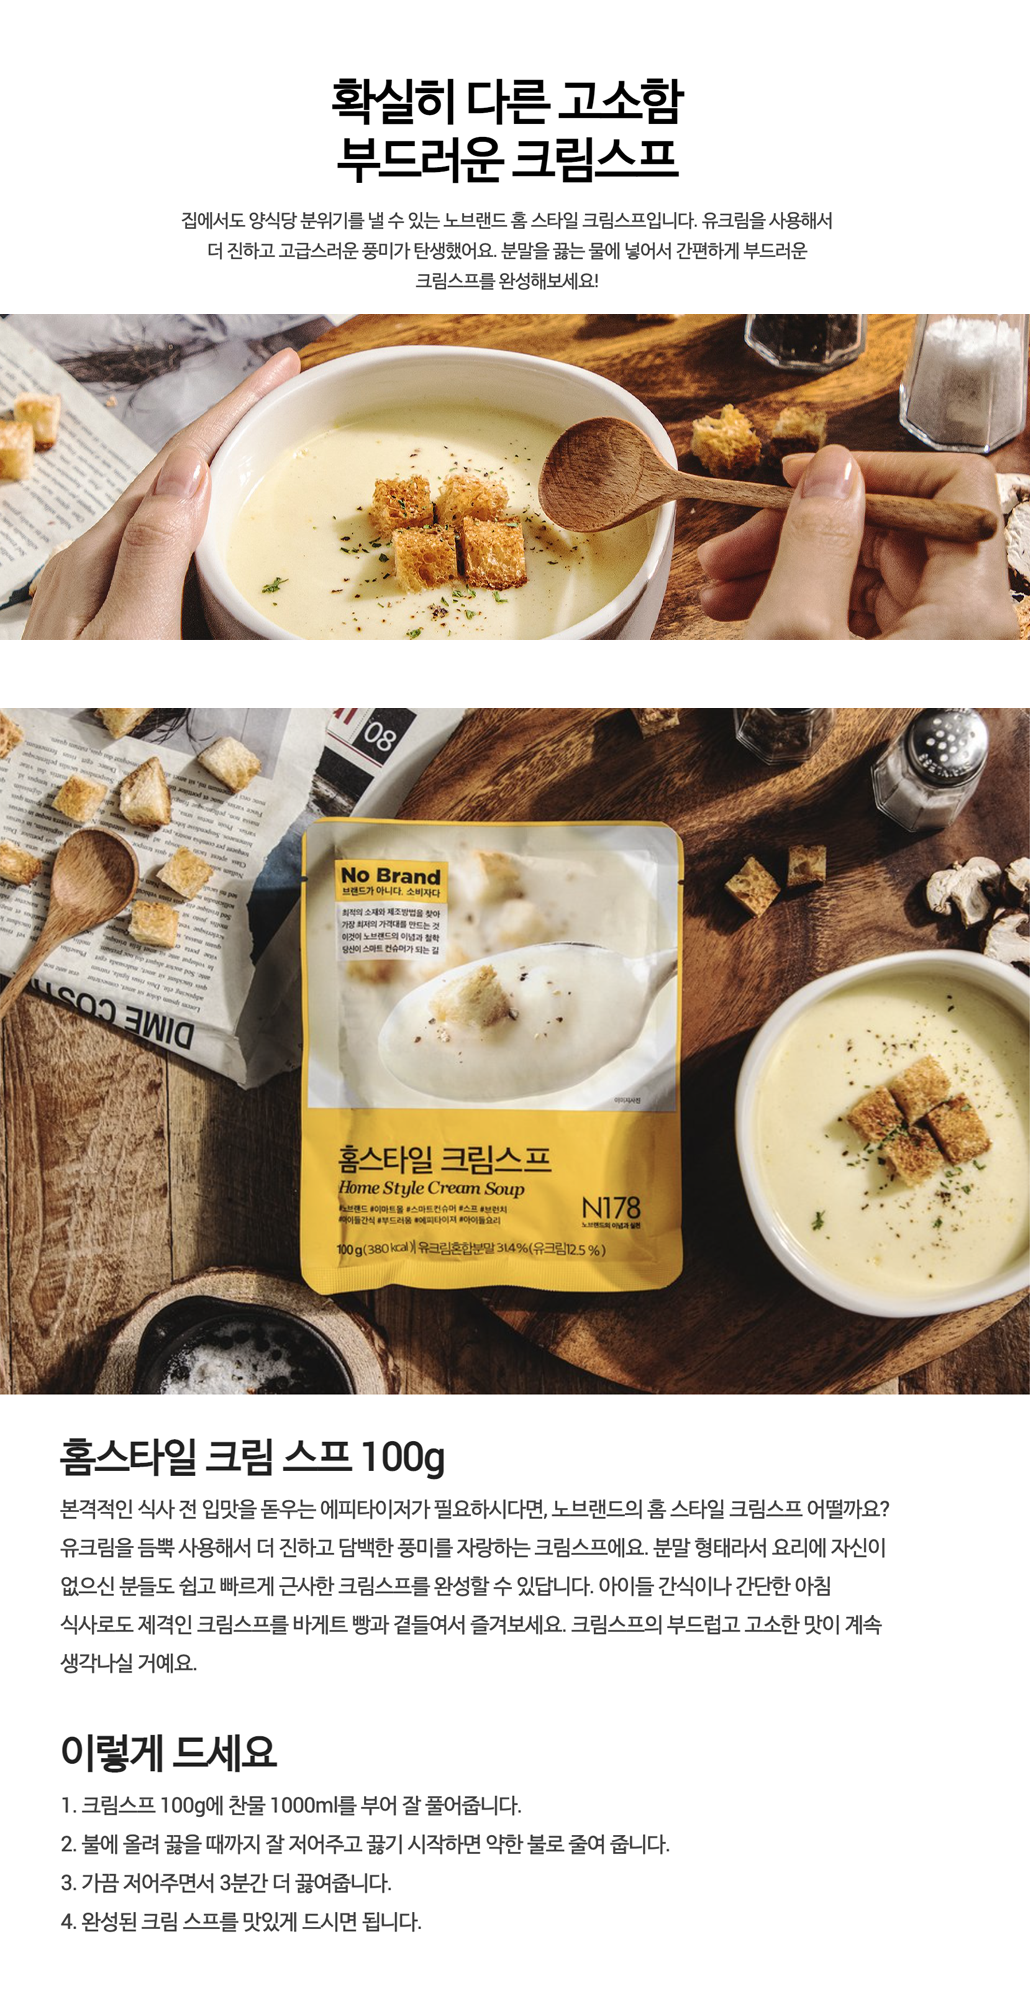 韓國食品-[No Brand] Home Style Cream Soup 100g